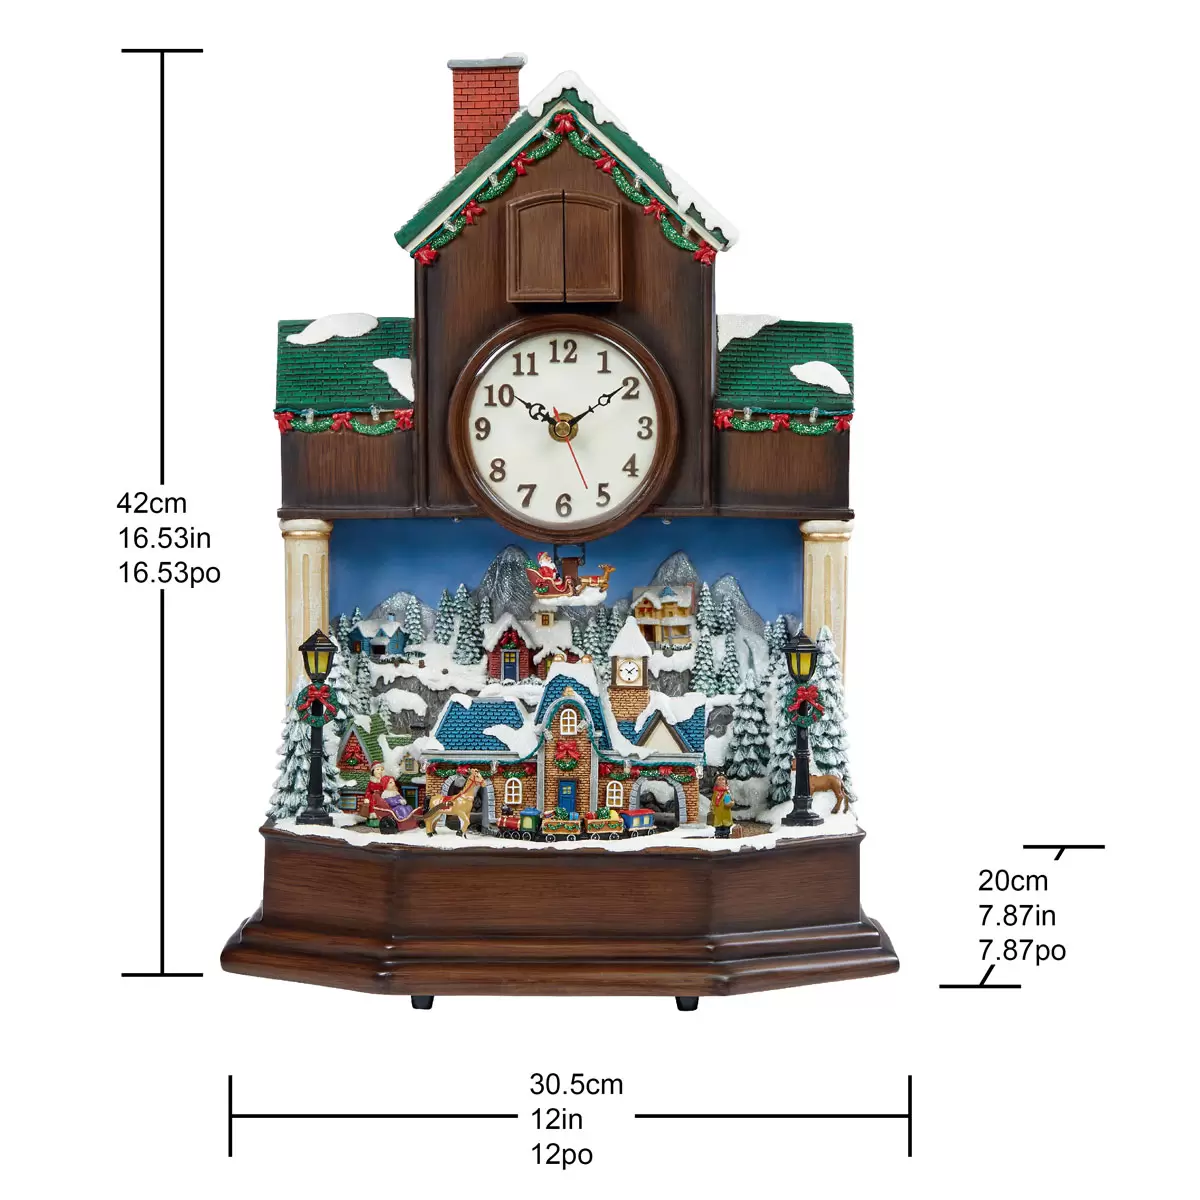 Buy Musical Cuckoo Clock Dimensions Image at Costco.co.uk